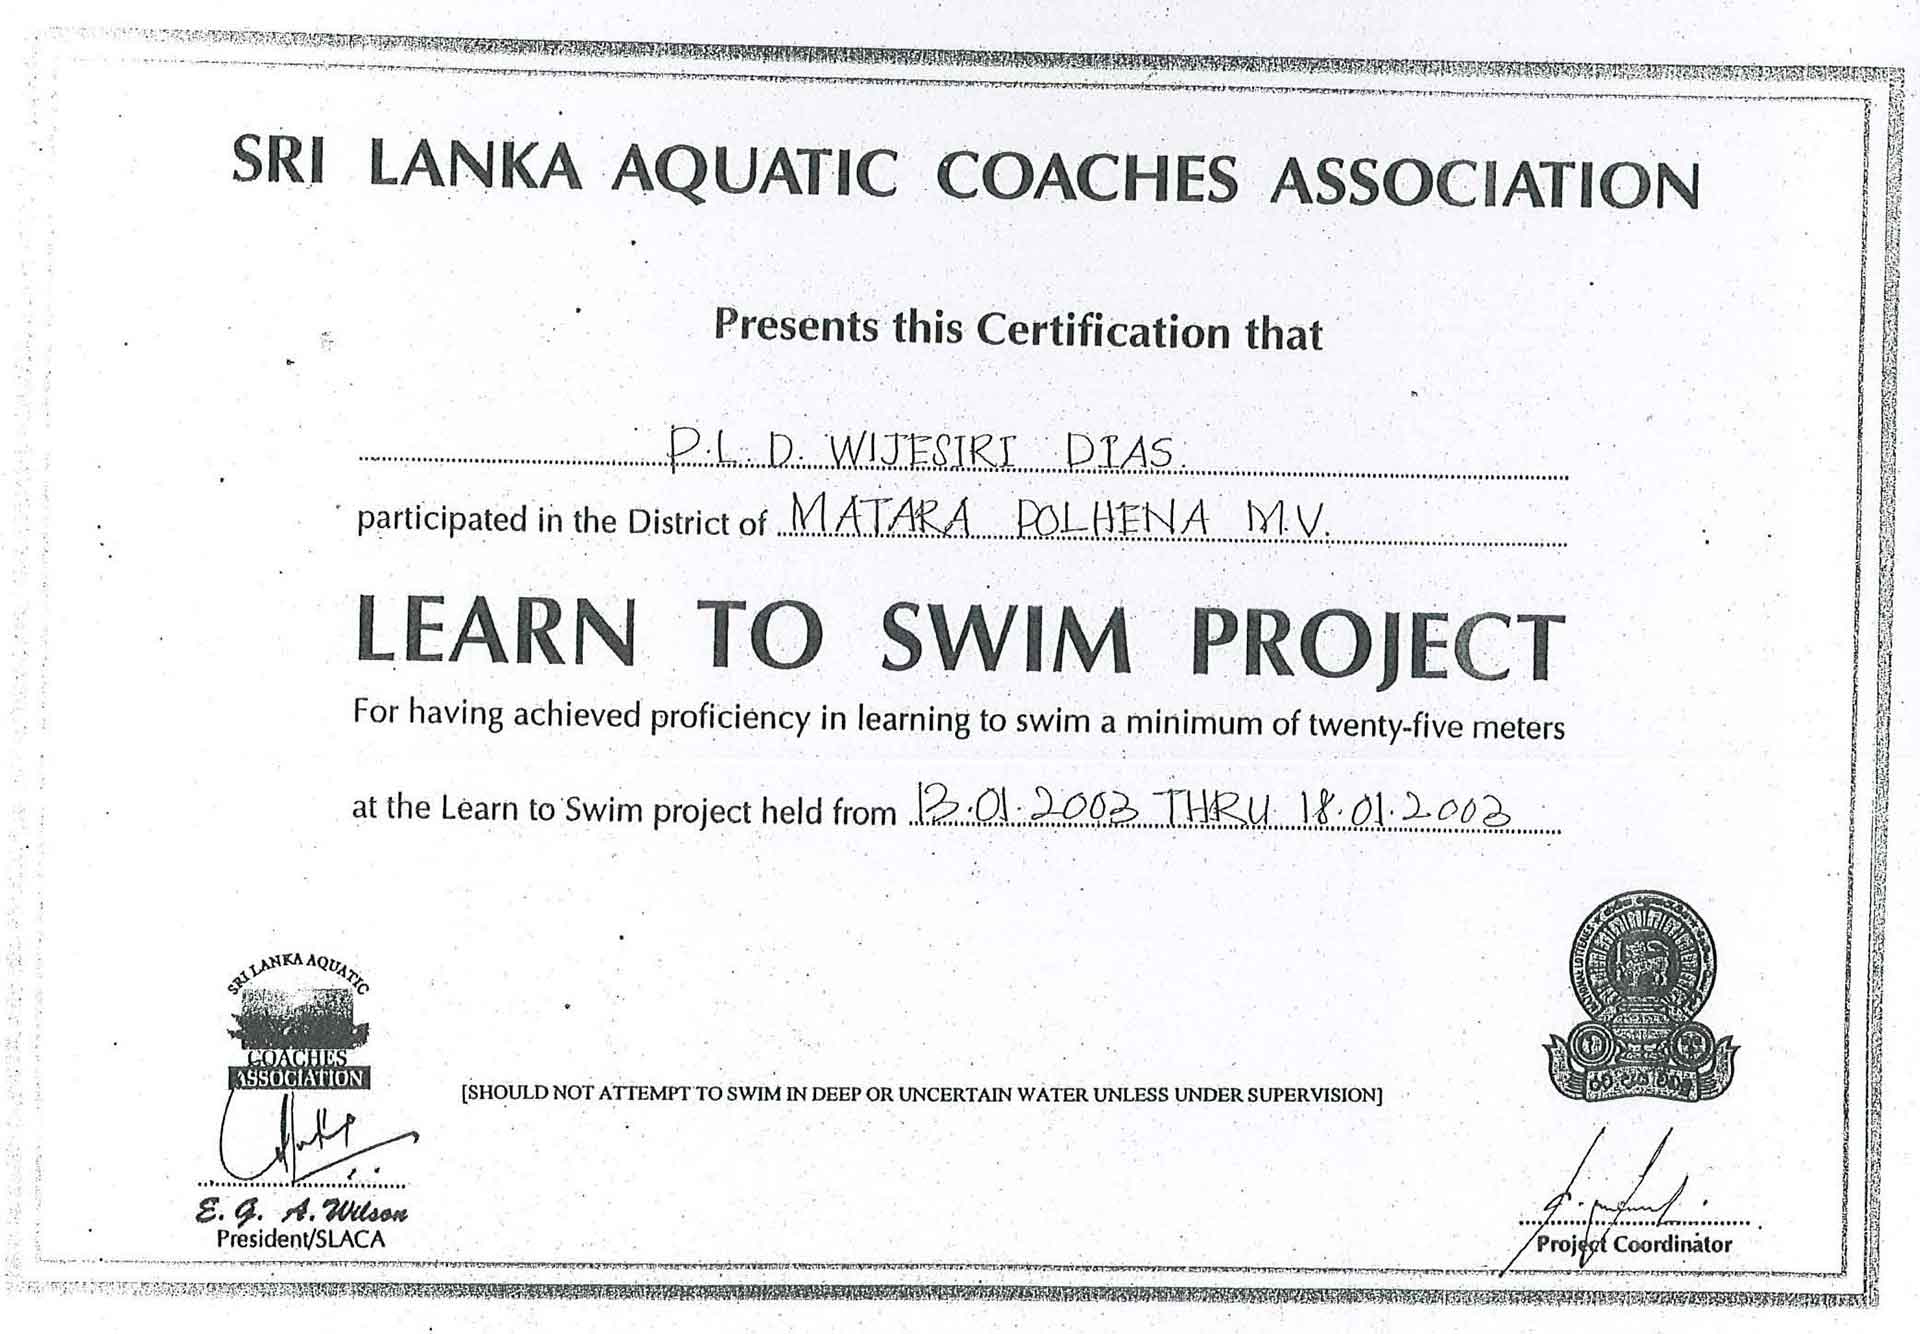 Sri Lanka Aquatic Coaches Association